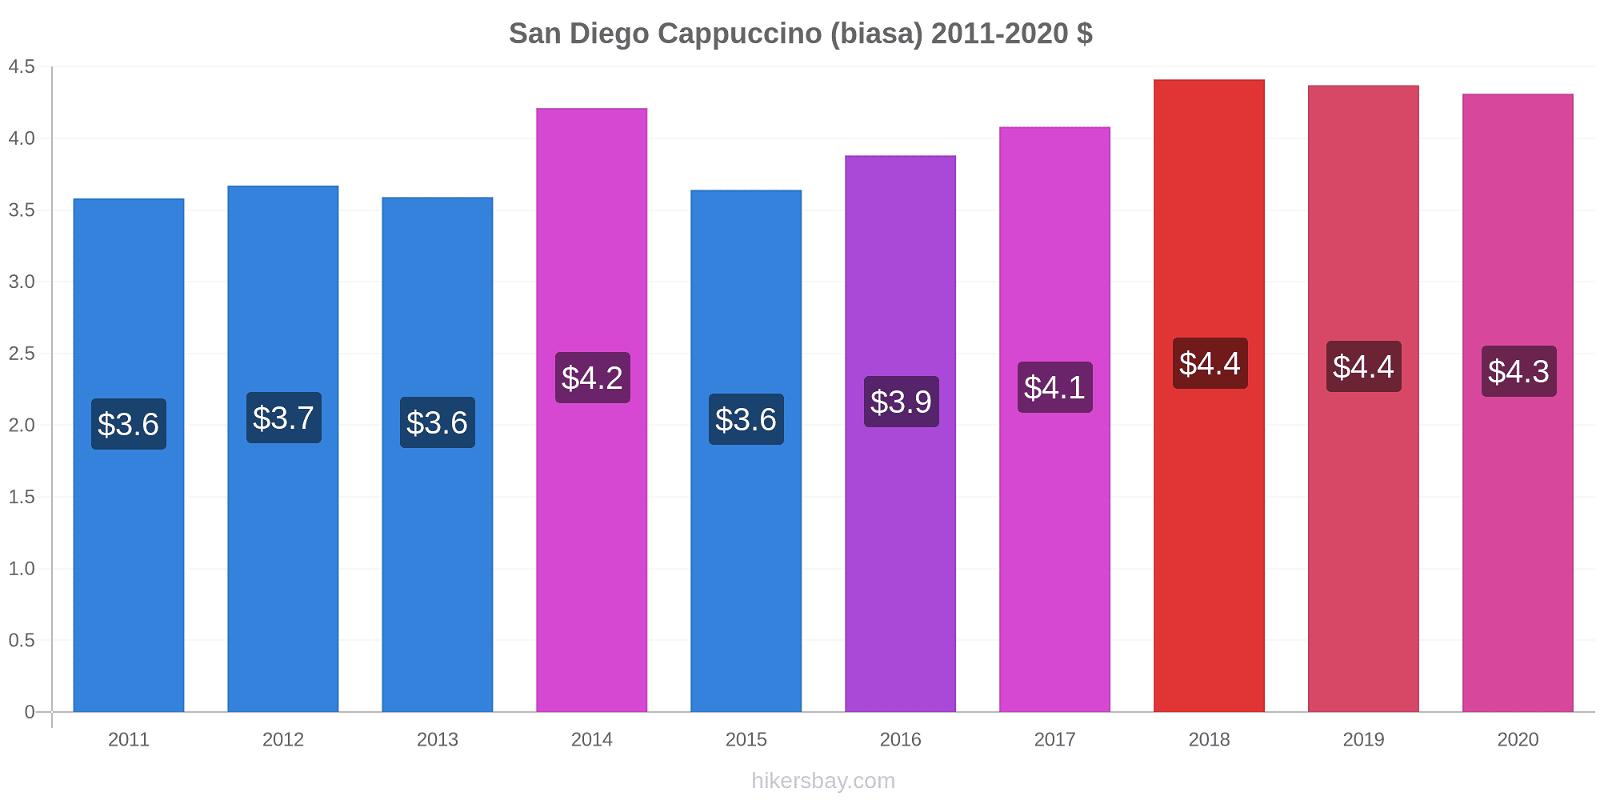 San Diego perubahan harga Cappuccino (biasa) hikersbay.com